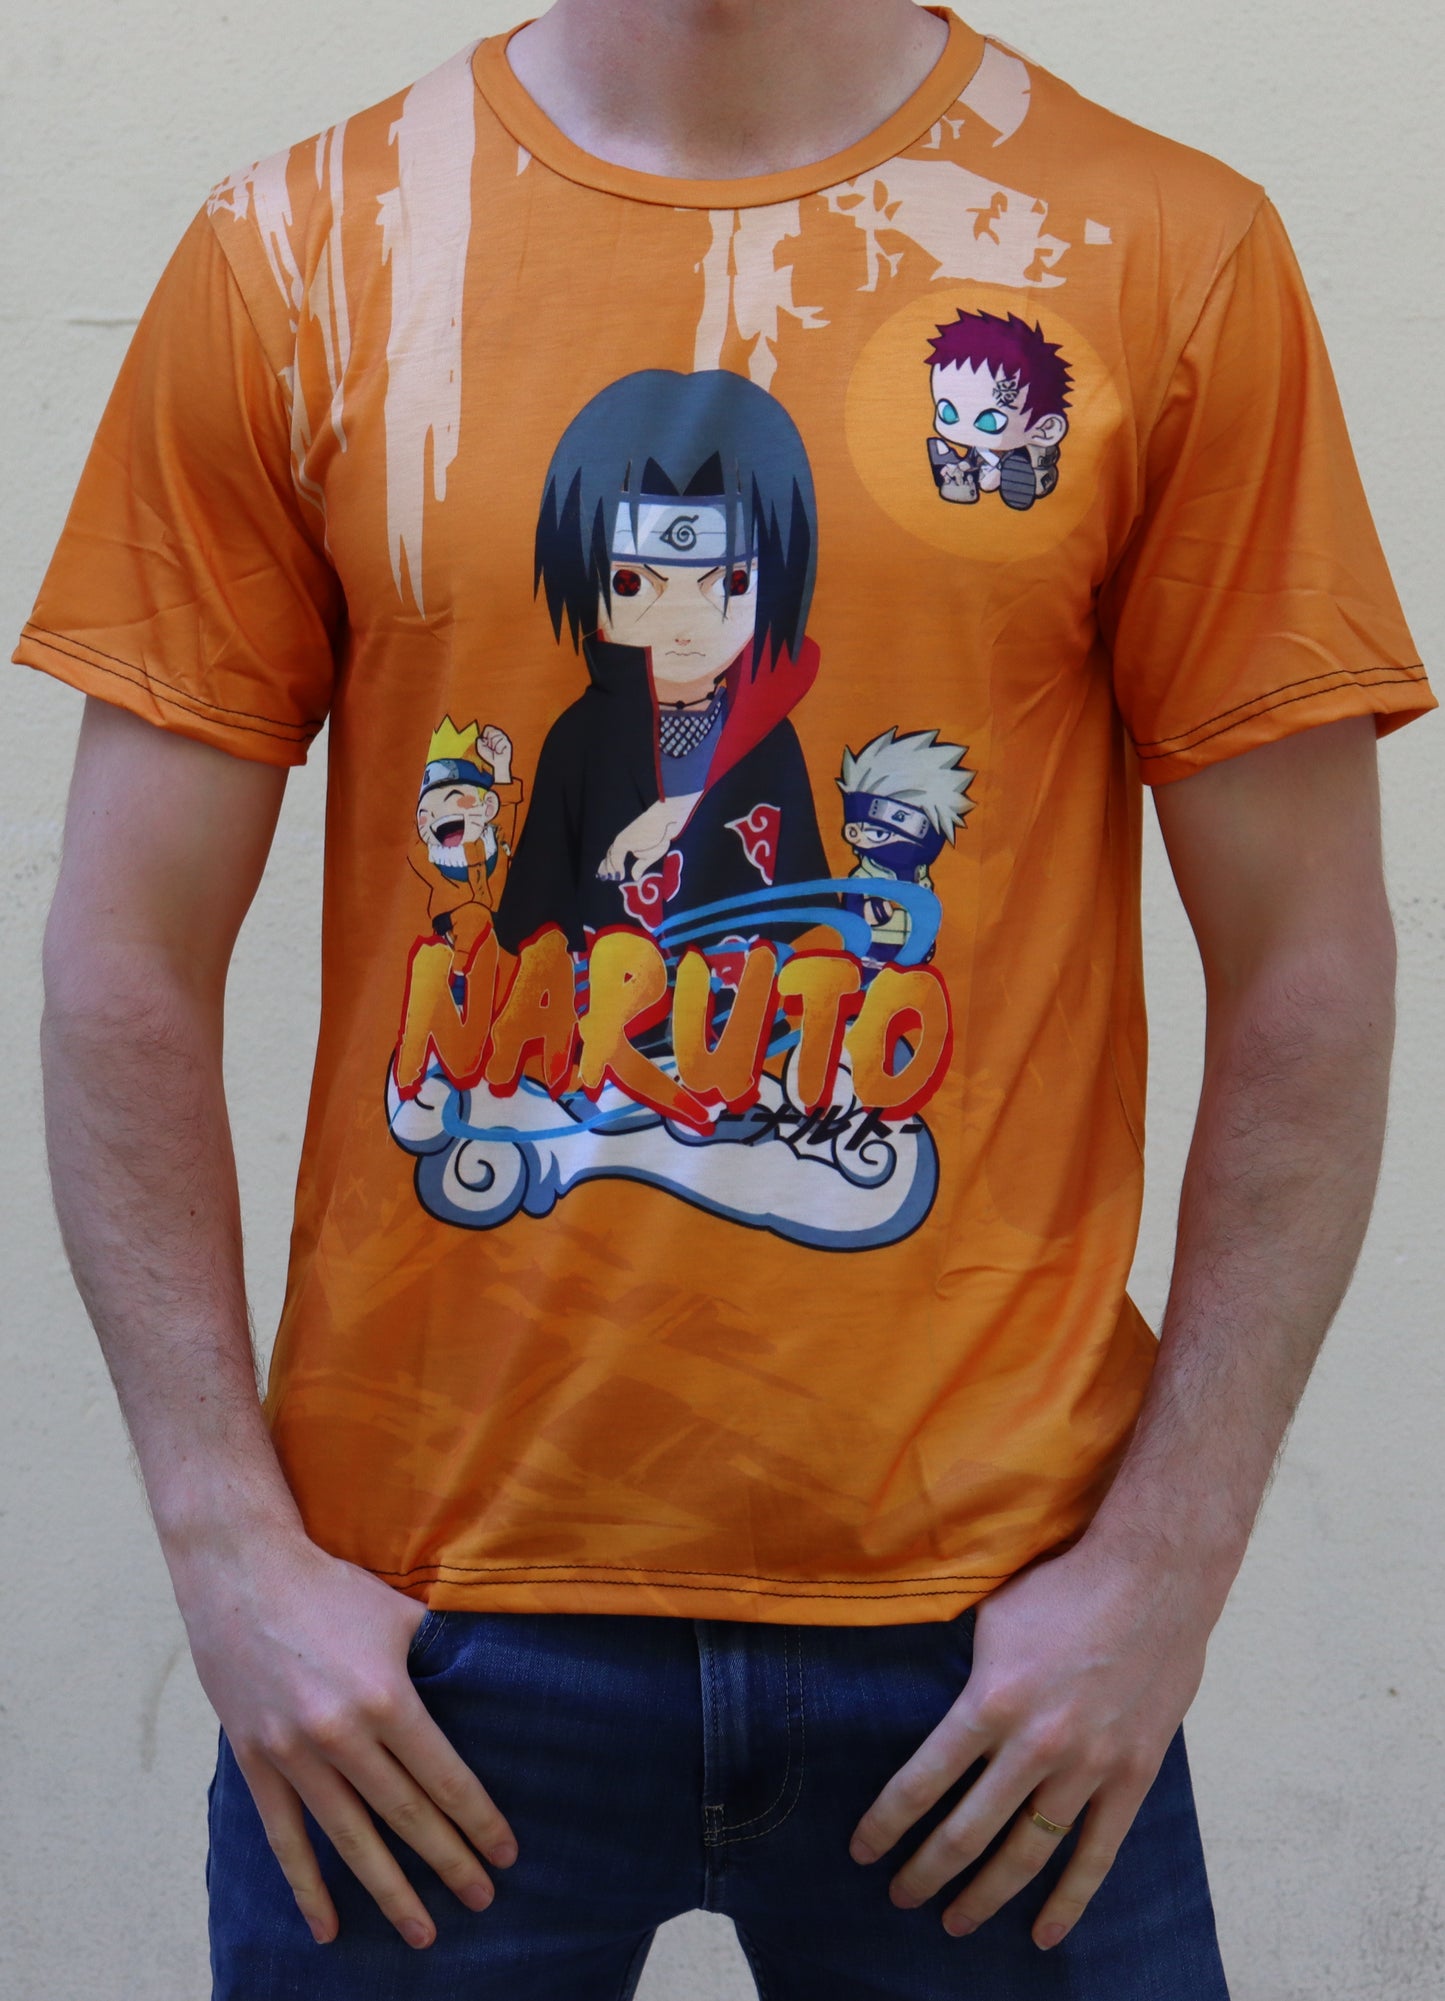 Naruto - Chibi Itachi TShirt (Price Does Not Include Shipping - Please Read Description)